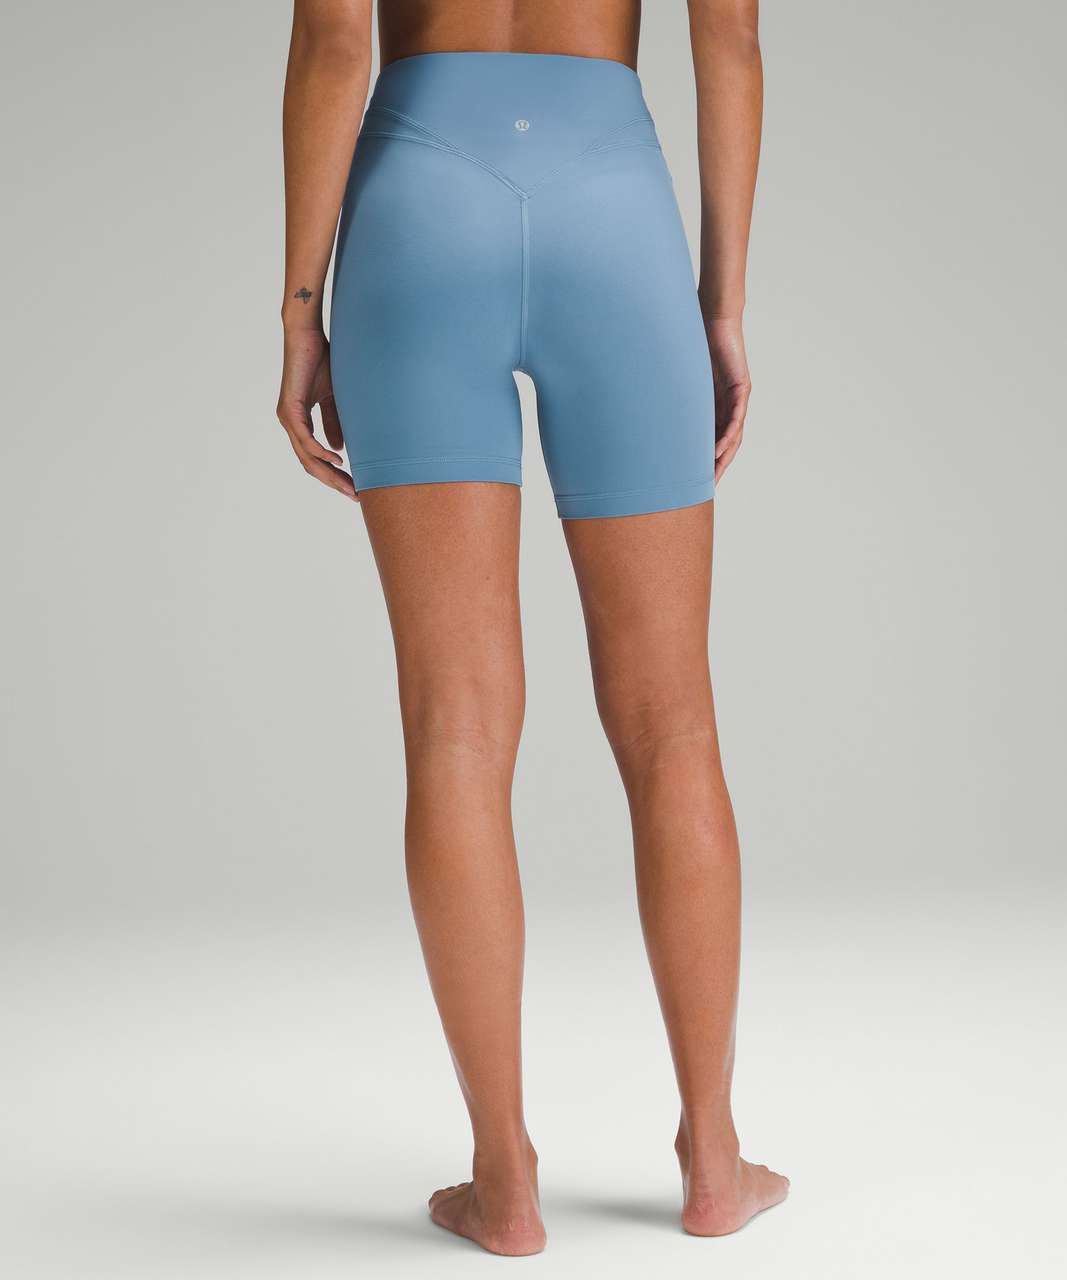 Blue Borealis align shorts! Wasn't planning on buying them but I did! : r/ lululemon